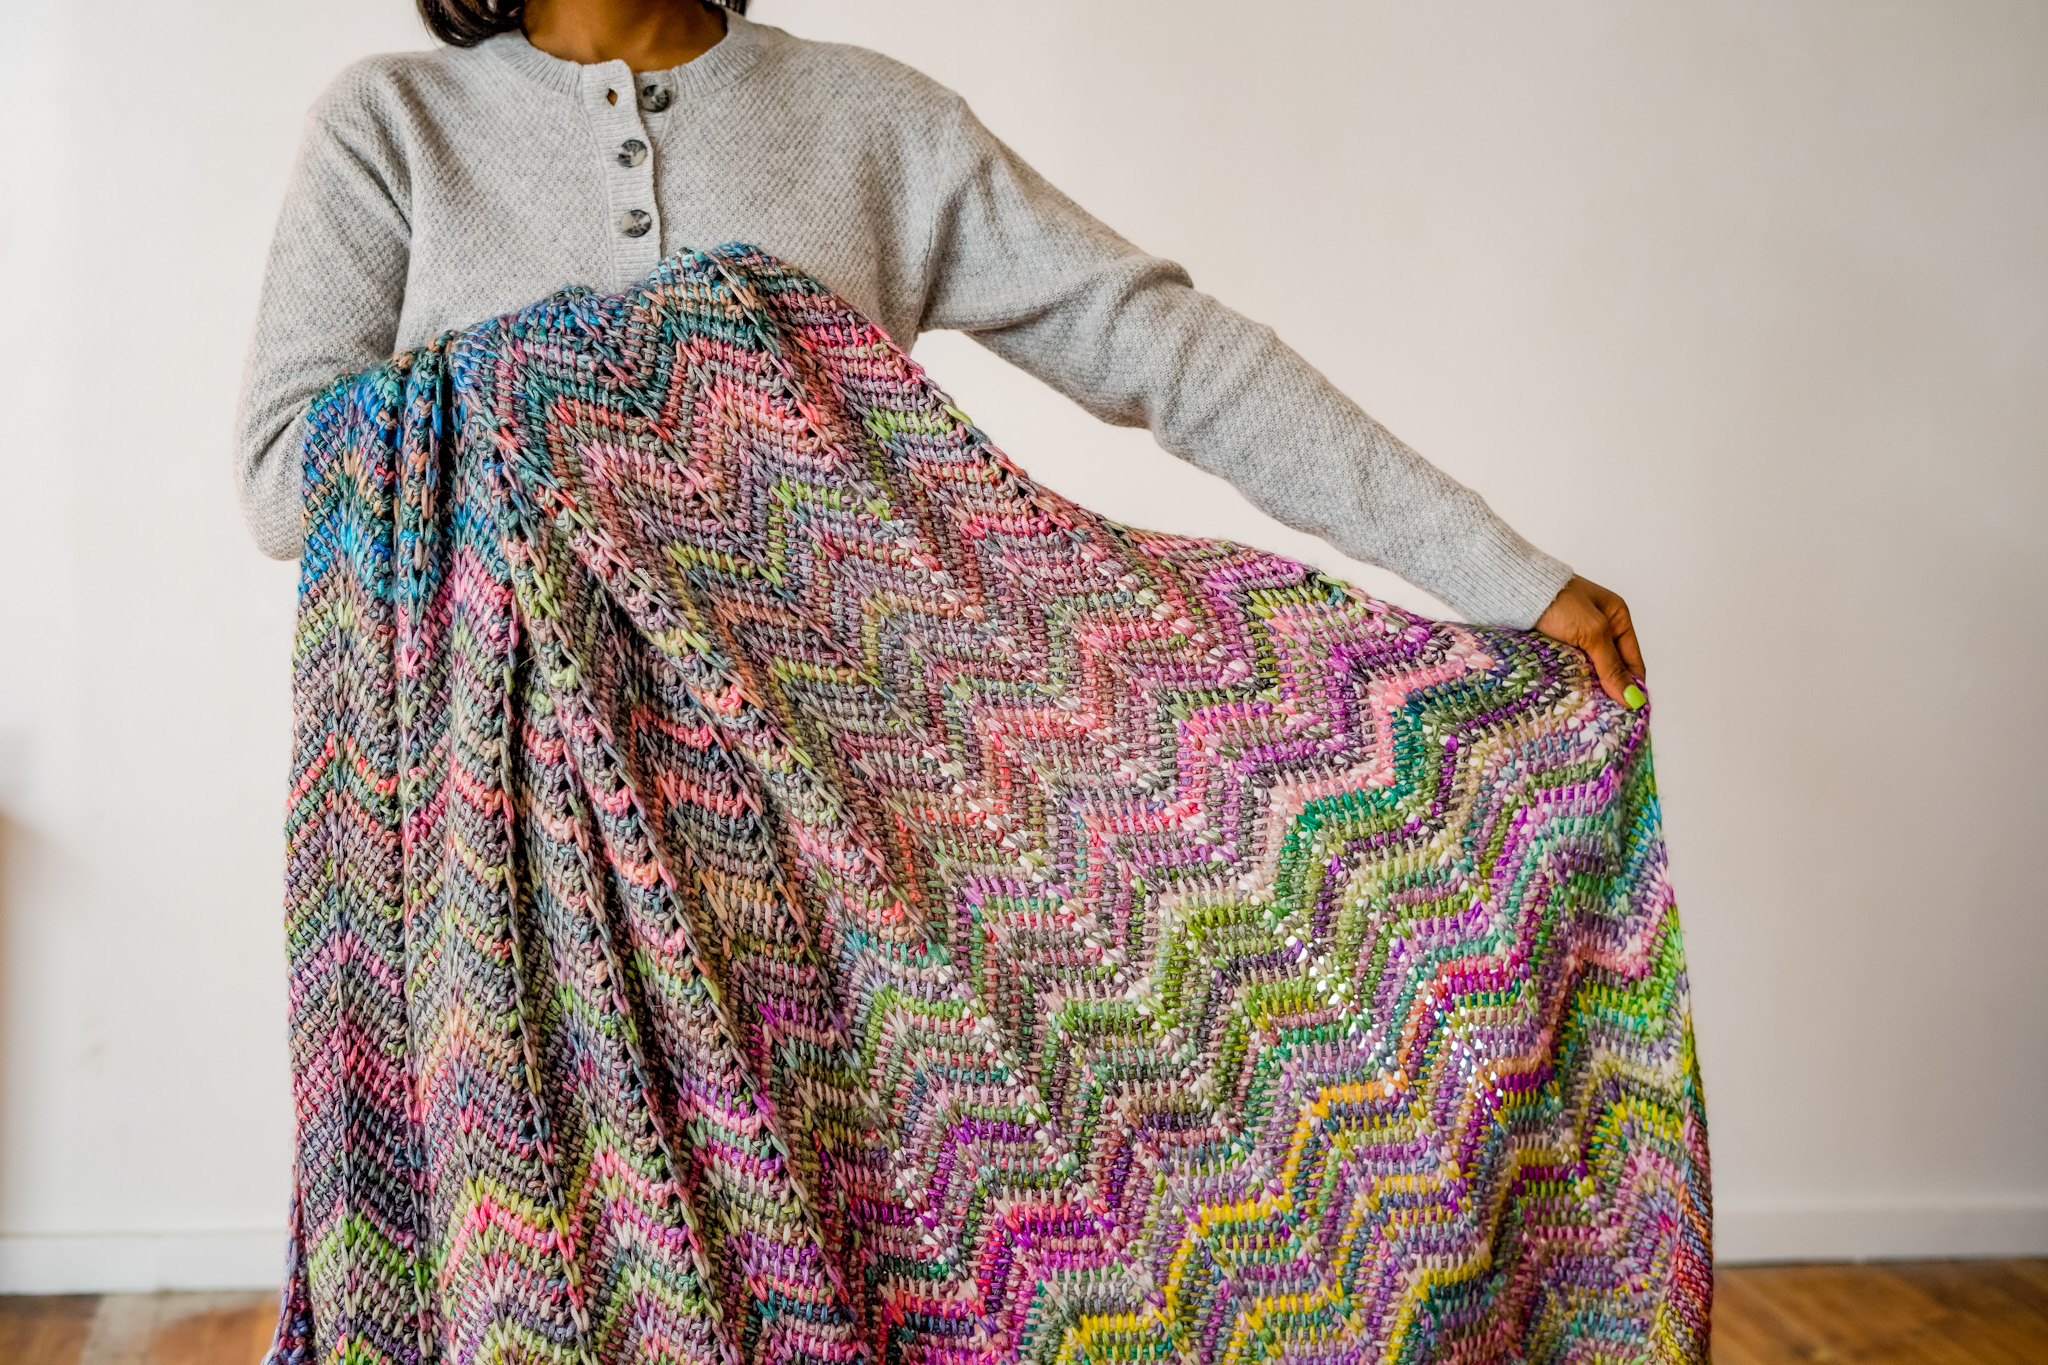 Beginner friendly Tunisian crochet chevron blanket with photo tutorial easy crochet throw blanket pattern worsted weight yarn.  | TLYCBlog.com